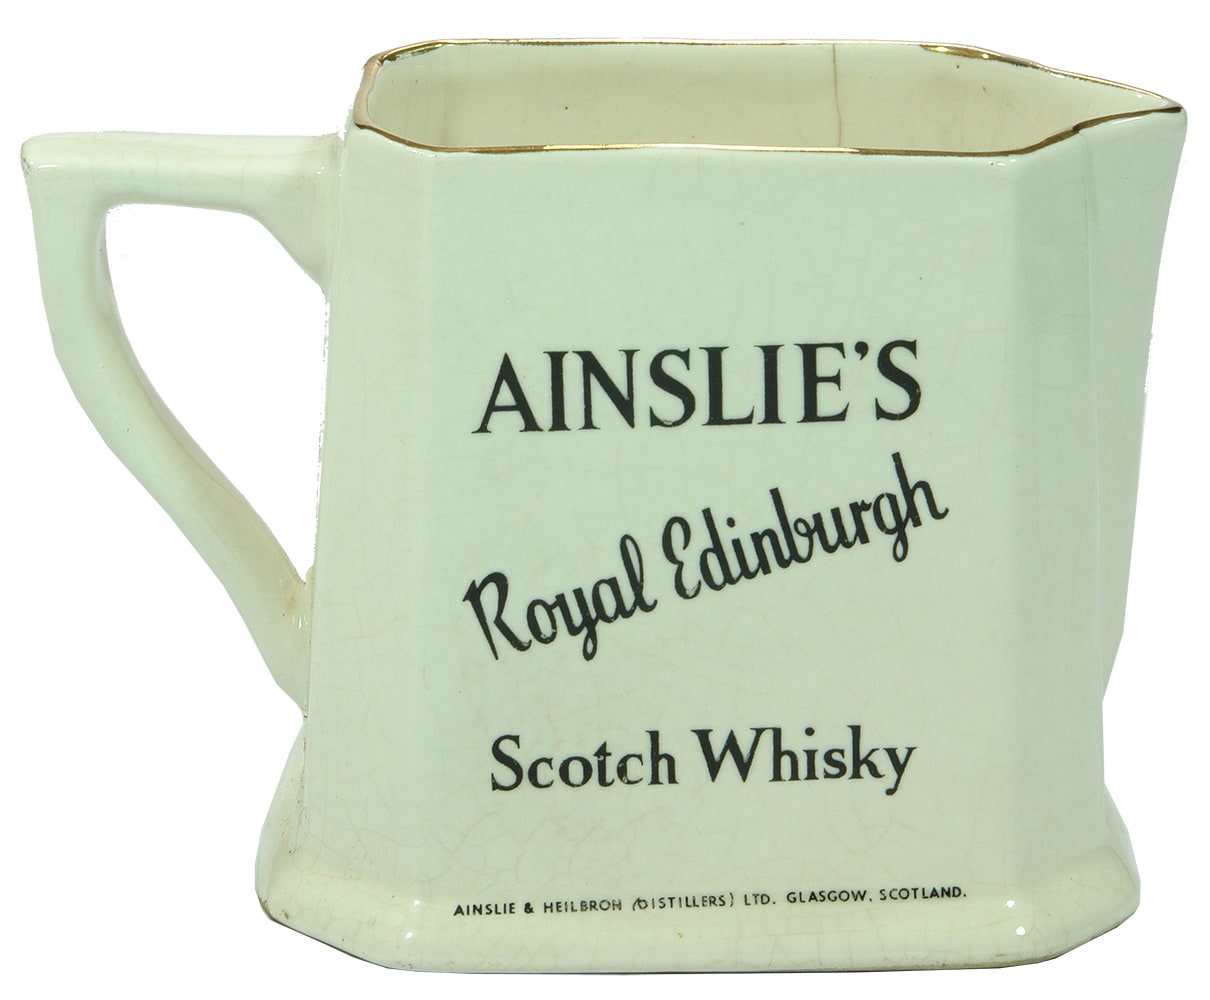 Ainslie's Royal Edinburgh Scotch Whisky Advertising Jug